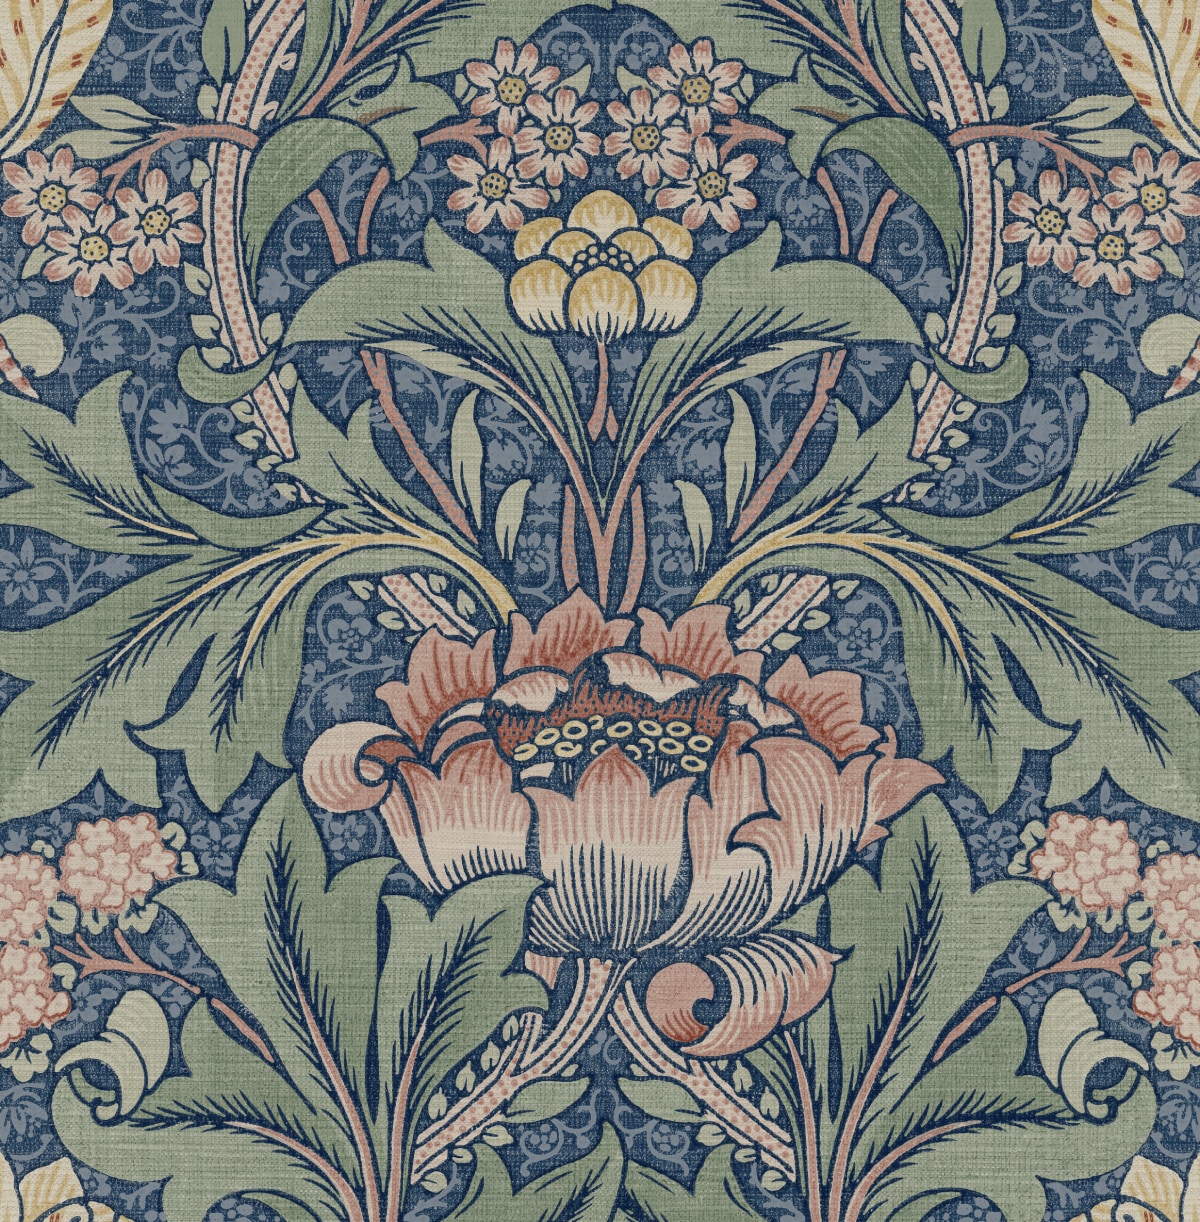 Blue Floral Wallpaper at Lowes.com